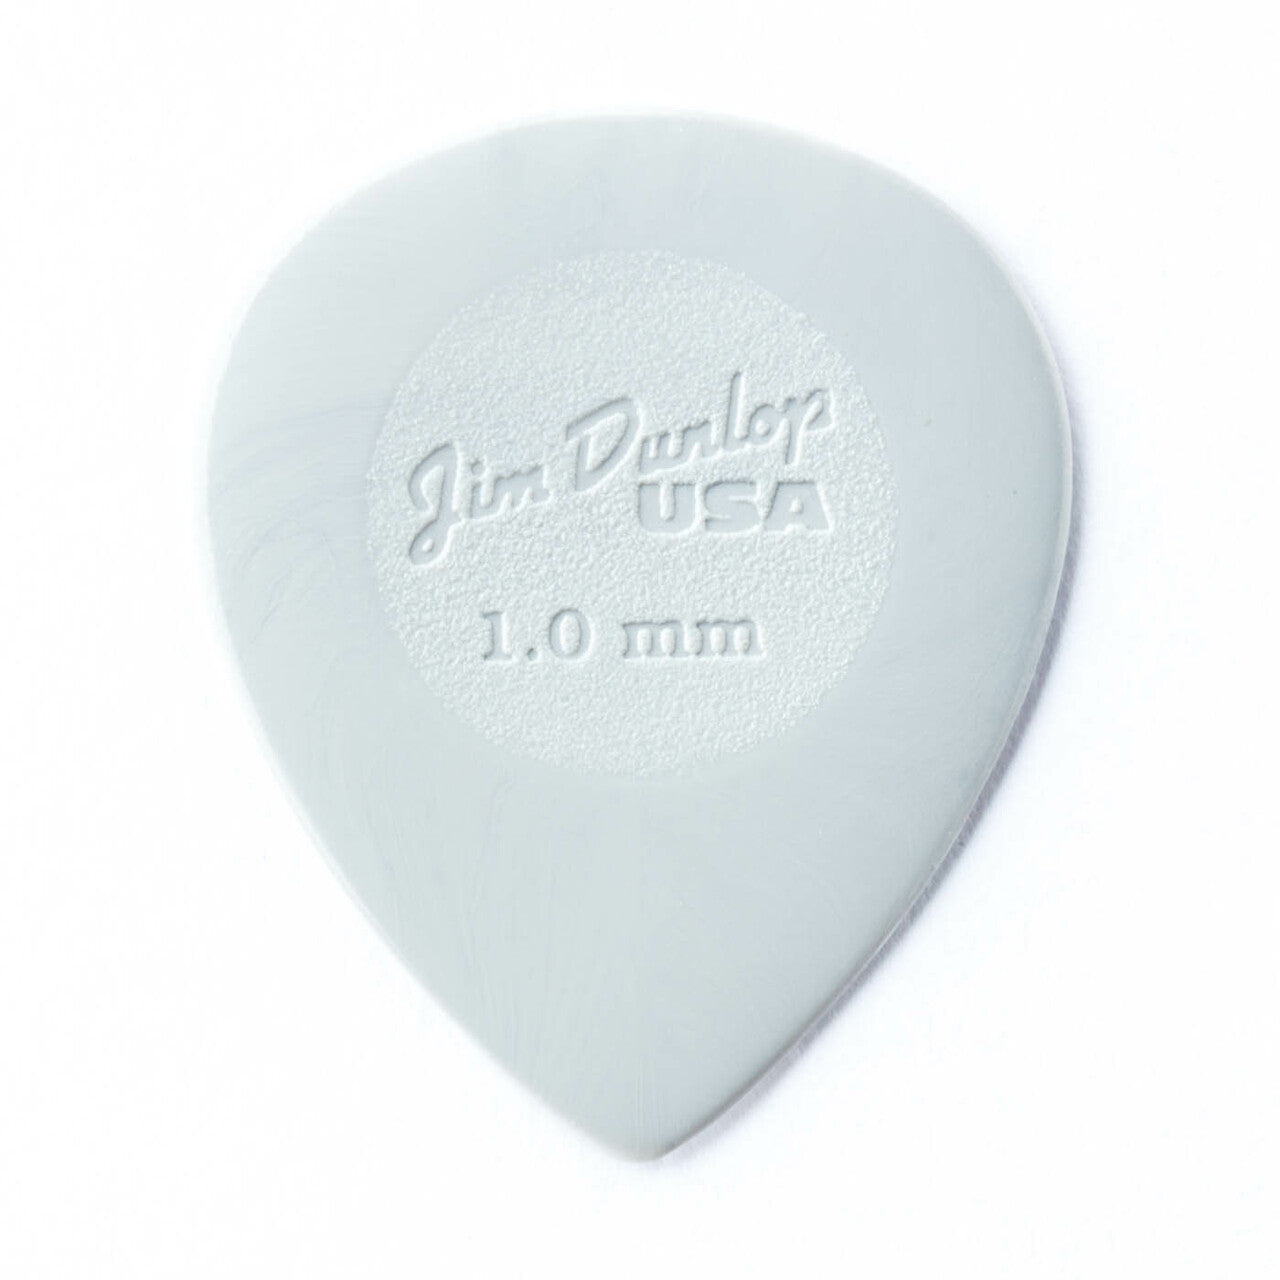 Jim Dunlop 445P1.0 Nylon Big Stubby Guitar Pick 1.0mm Guitar Picks Player Pack - Reco Music Malaysia